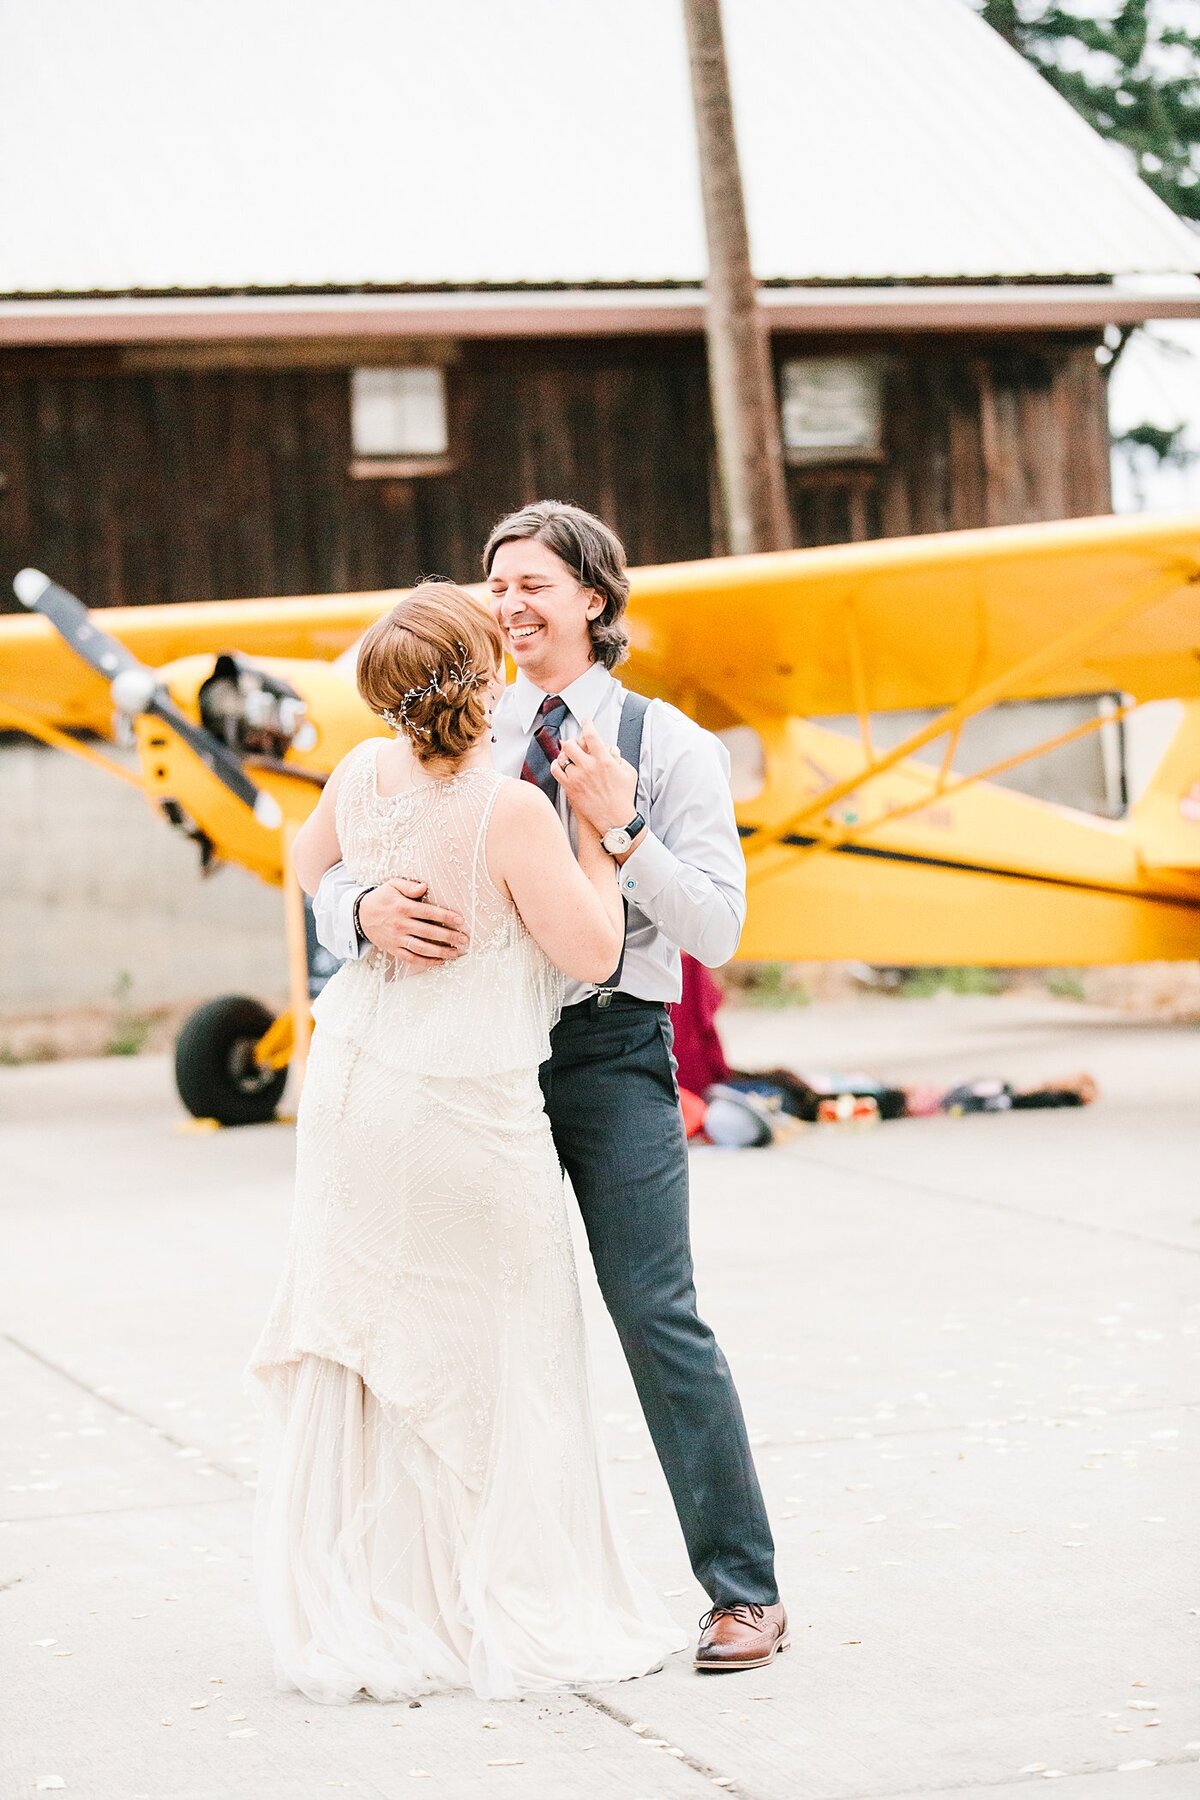 A Pilot's Wedding in an Airplane Hangar Portland OR-1038